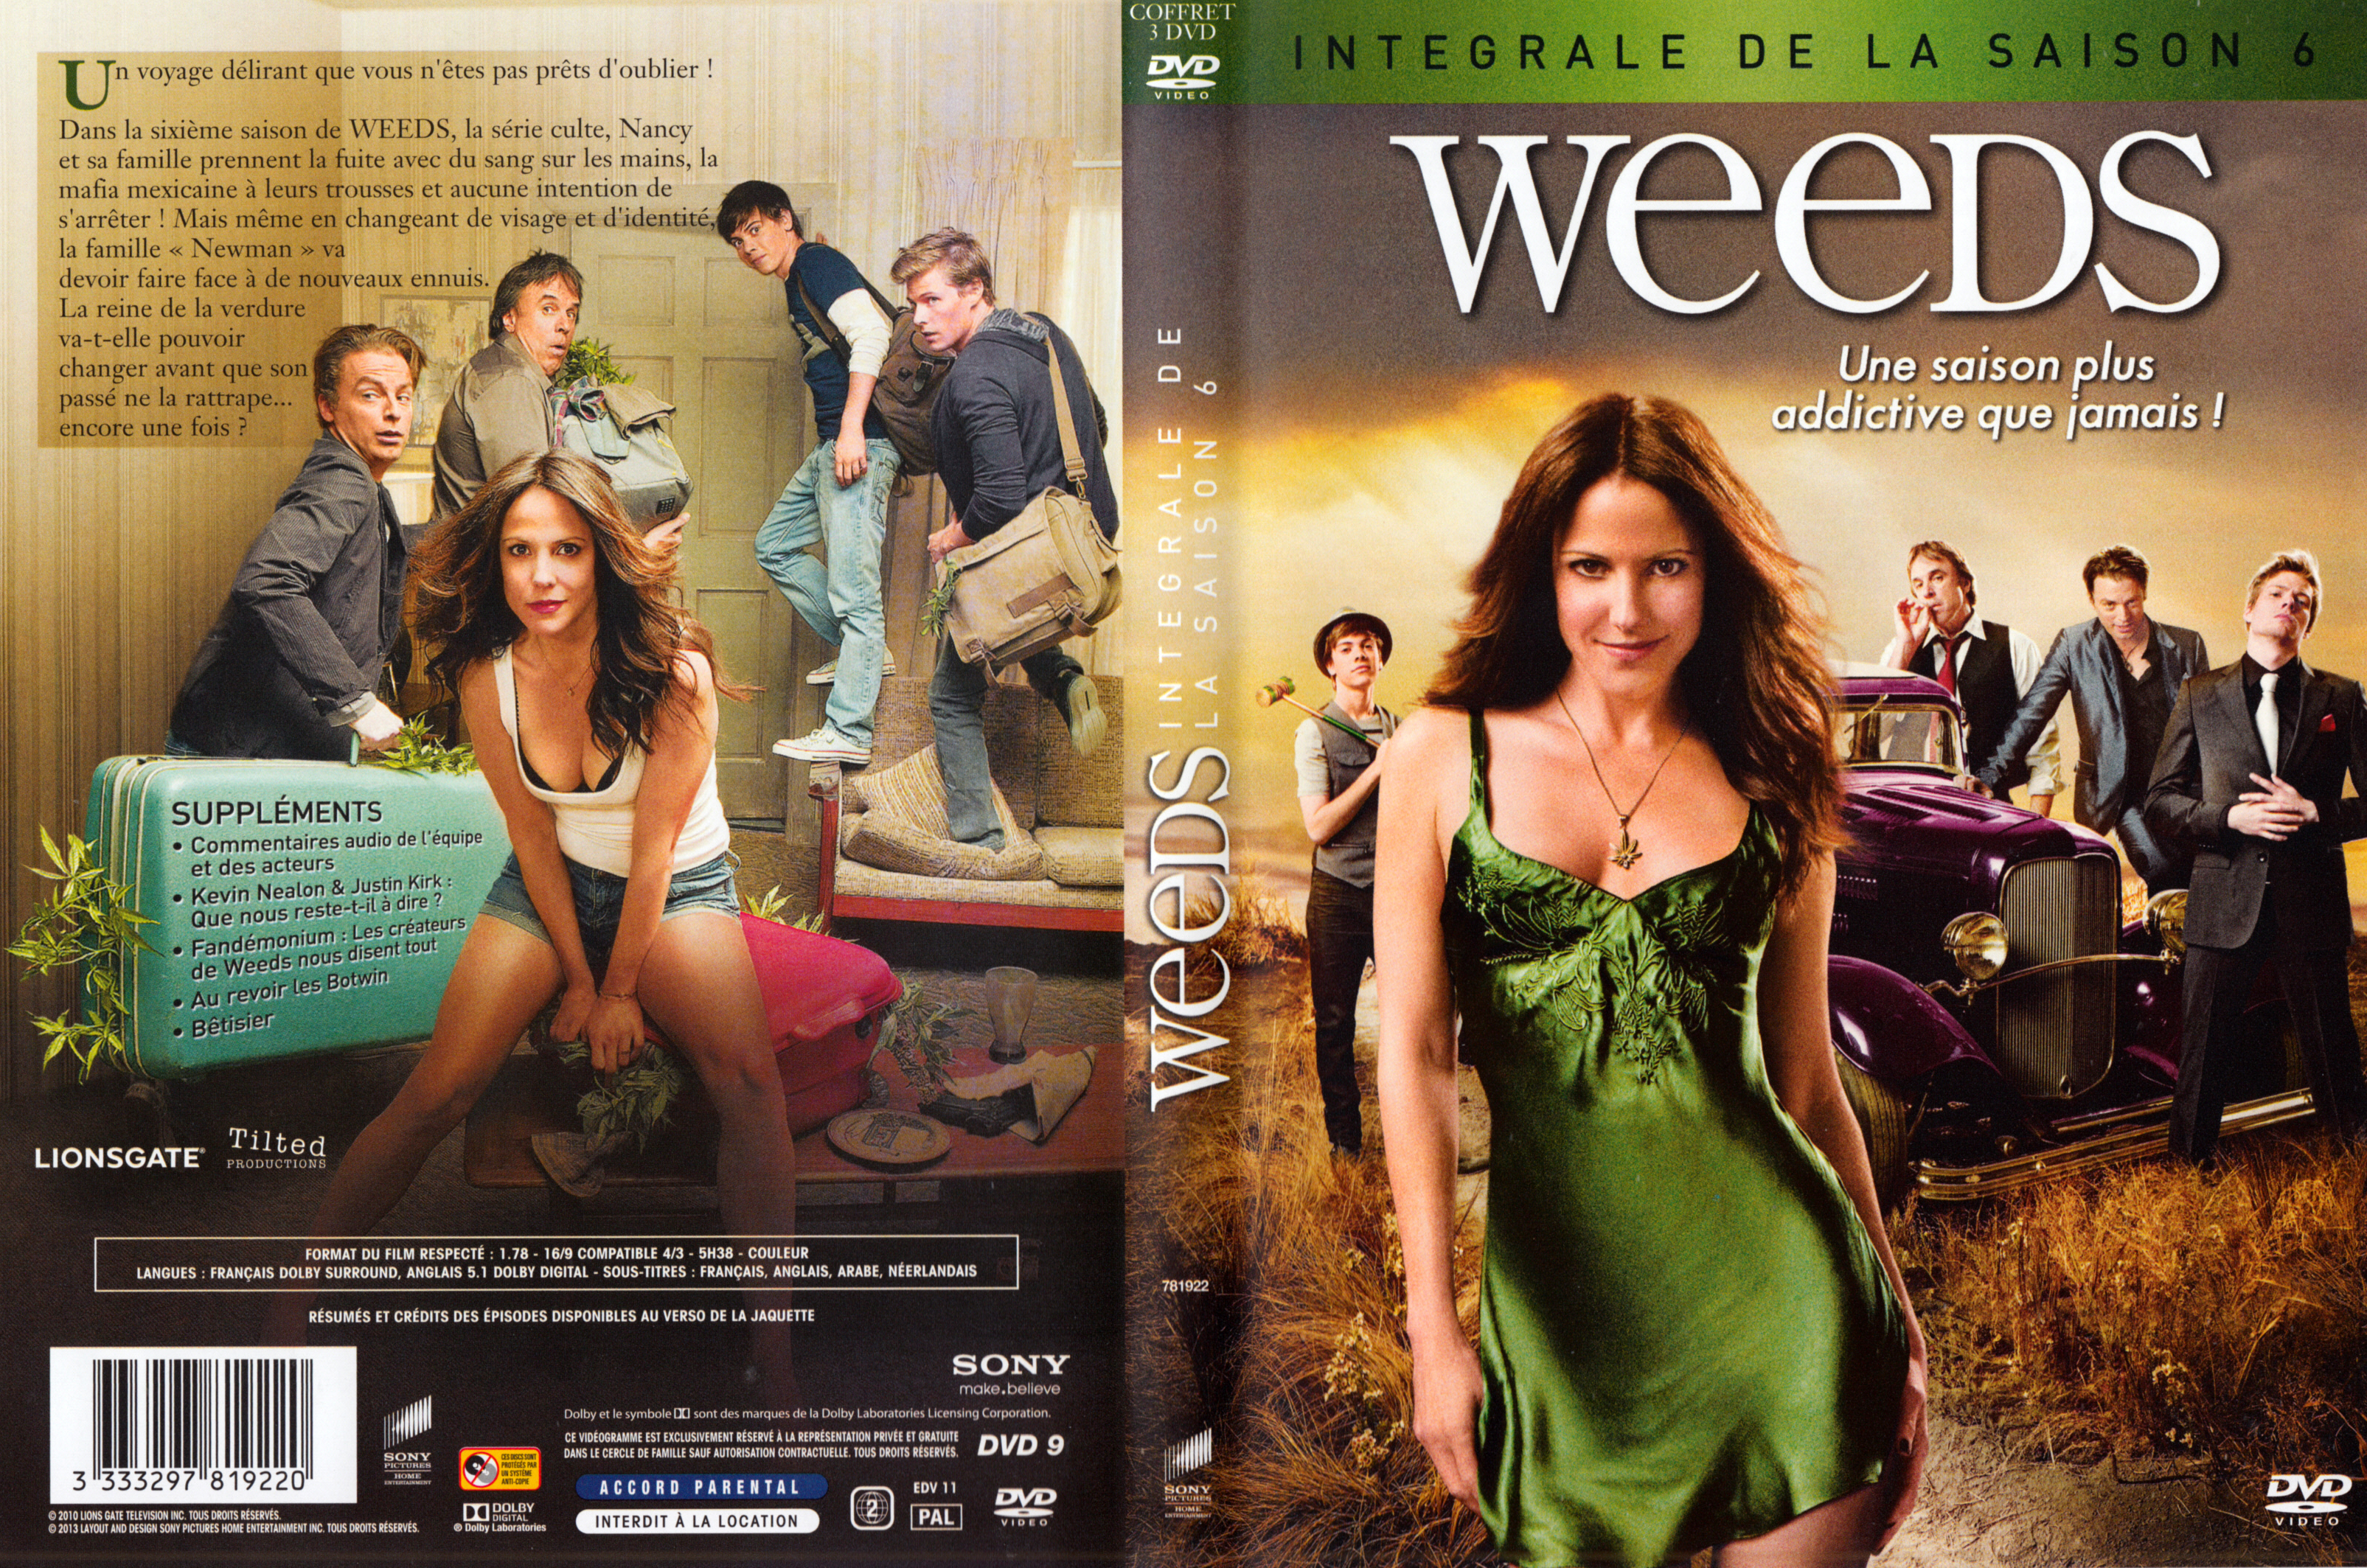 Jaquette DVD Weeds Saison 6